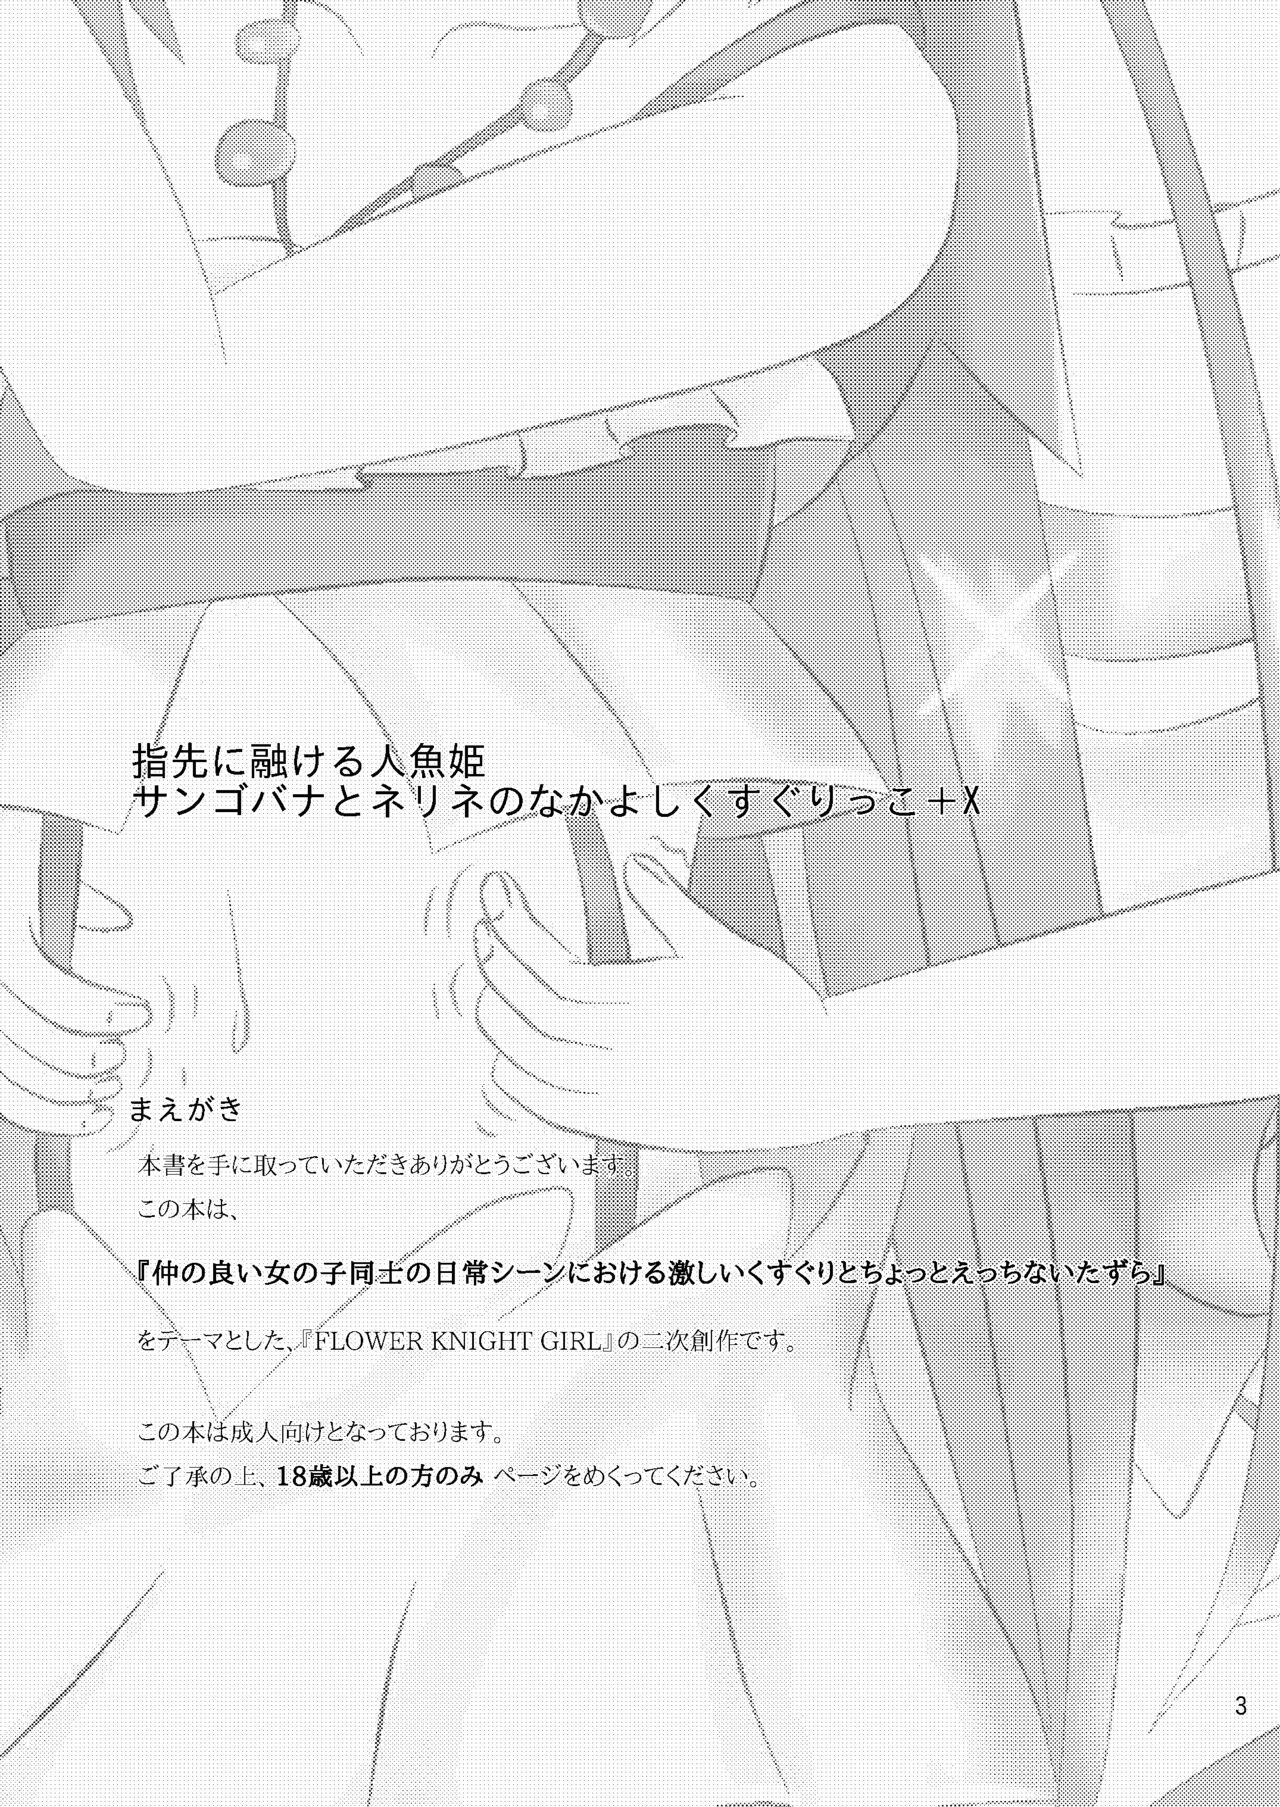 Affair Yubisaki ni Tokeru Ningyohime - Sangobana to Nerine no Nakayoshi Kusugurikko + X - Flower knight girl Clitoris - Page 3